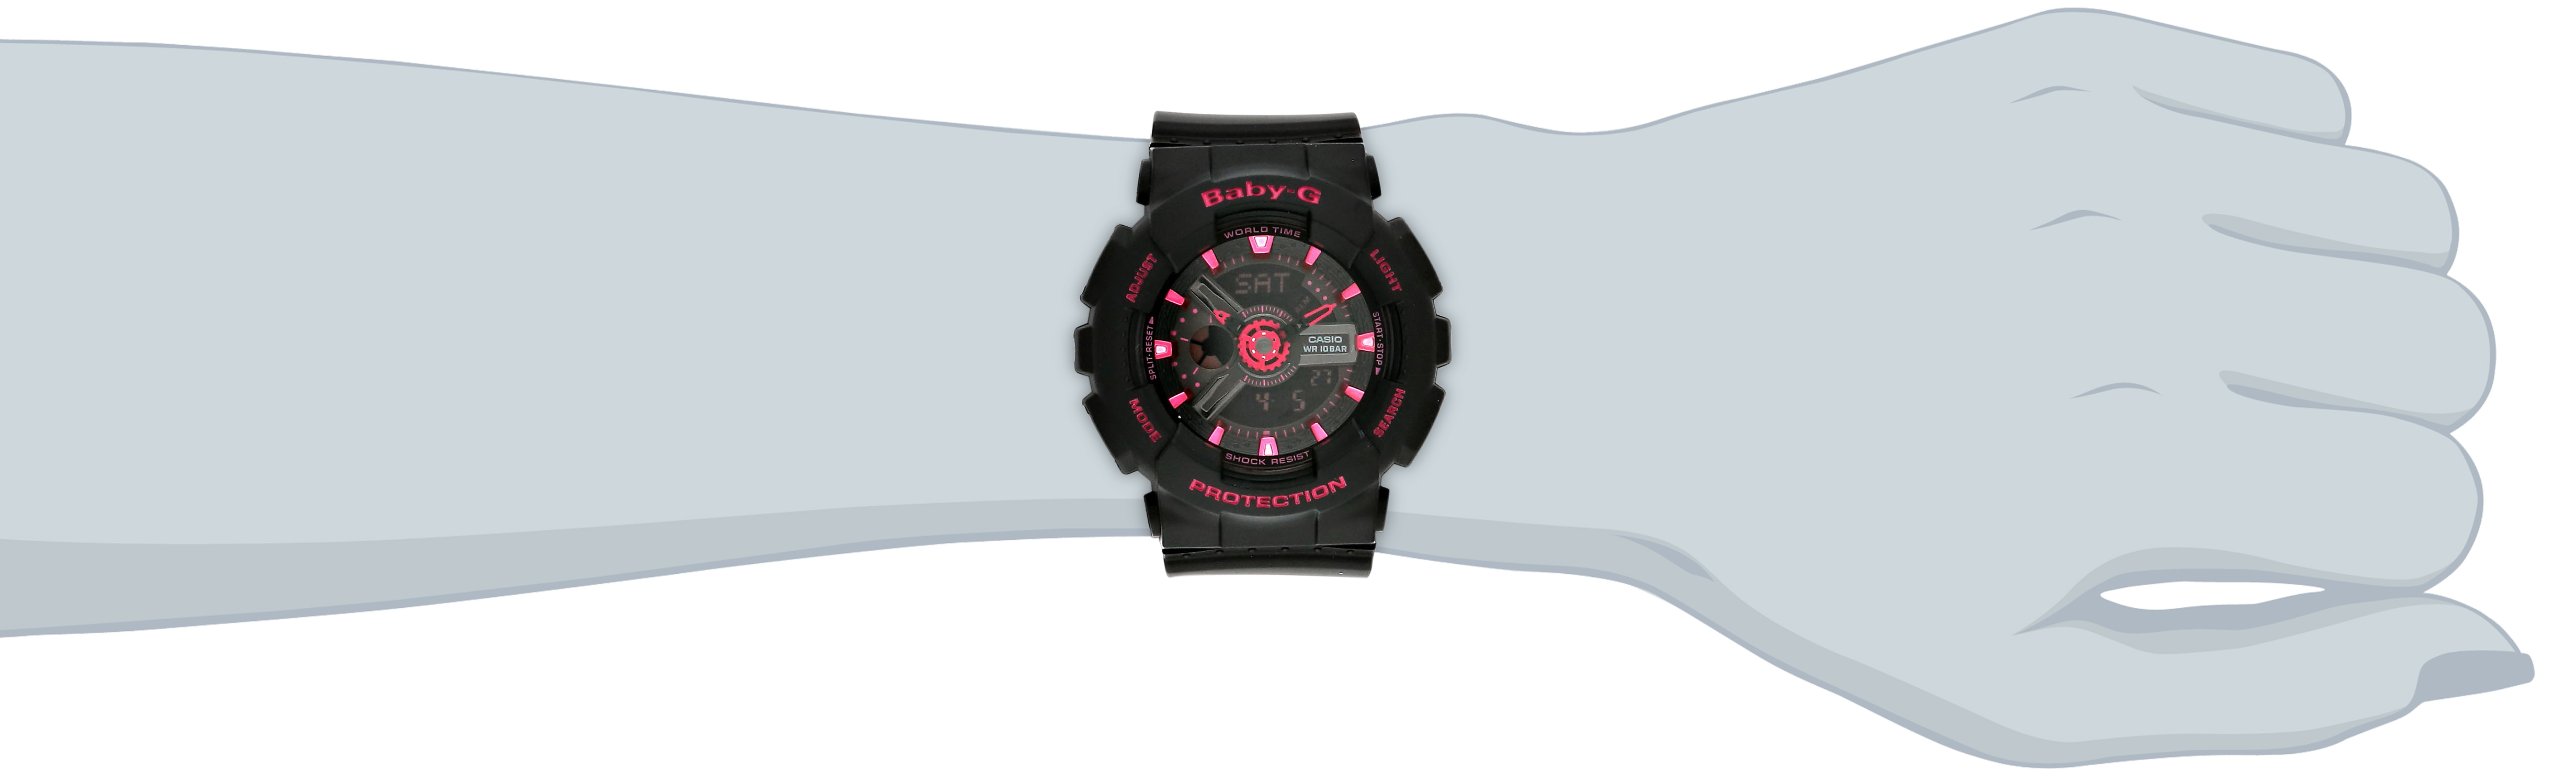 Casio Women's BA-111-1ACR Baby-G Analog-Digital Display Quartz Black Watch